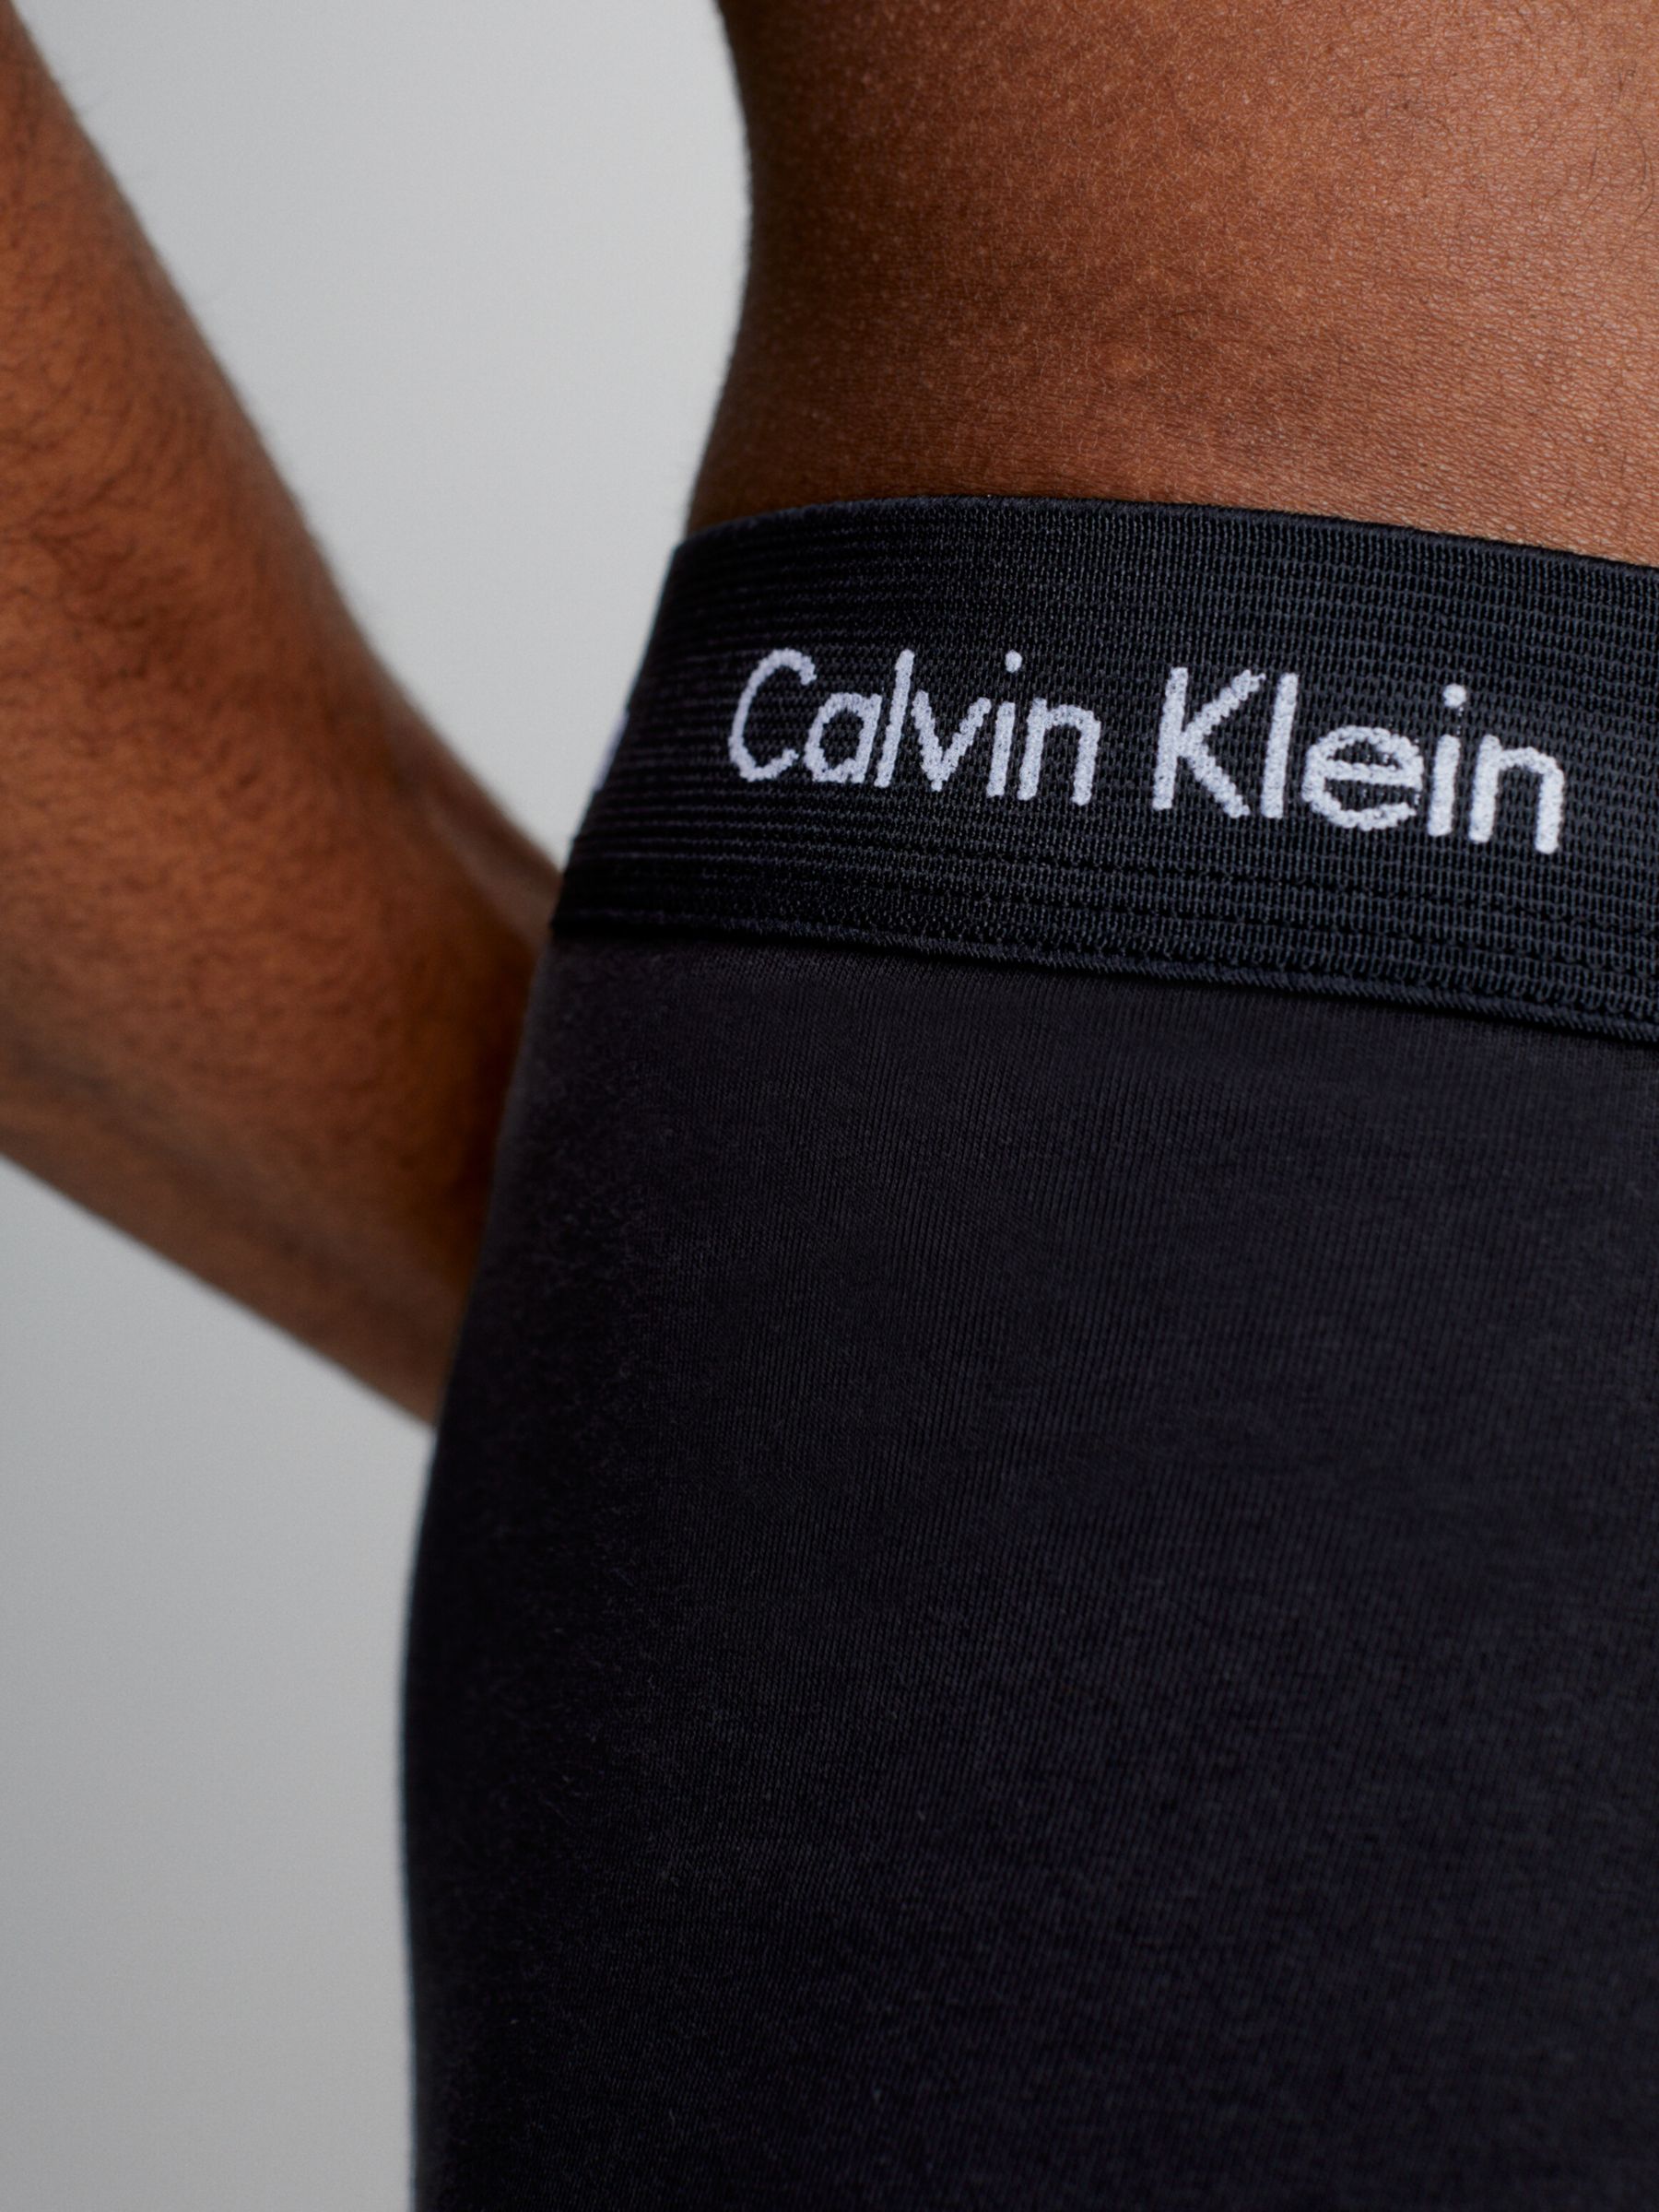 Calvin Klein Men's Cotton Stretch Multipack Boxer Briefs, Cobalt